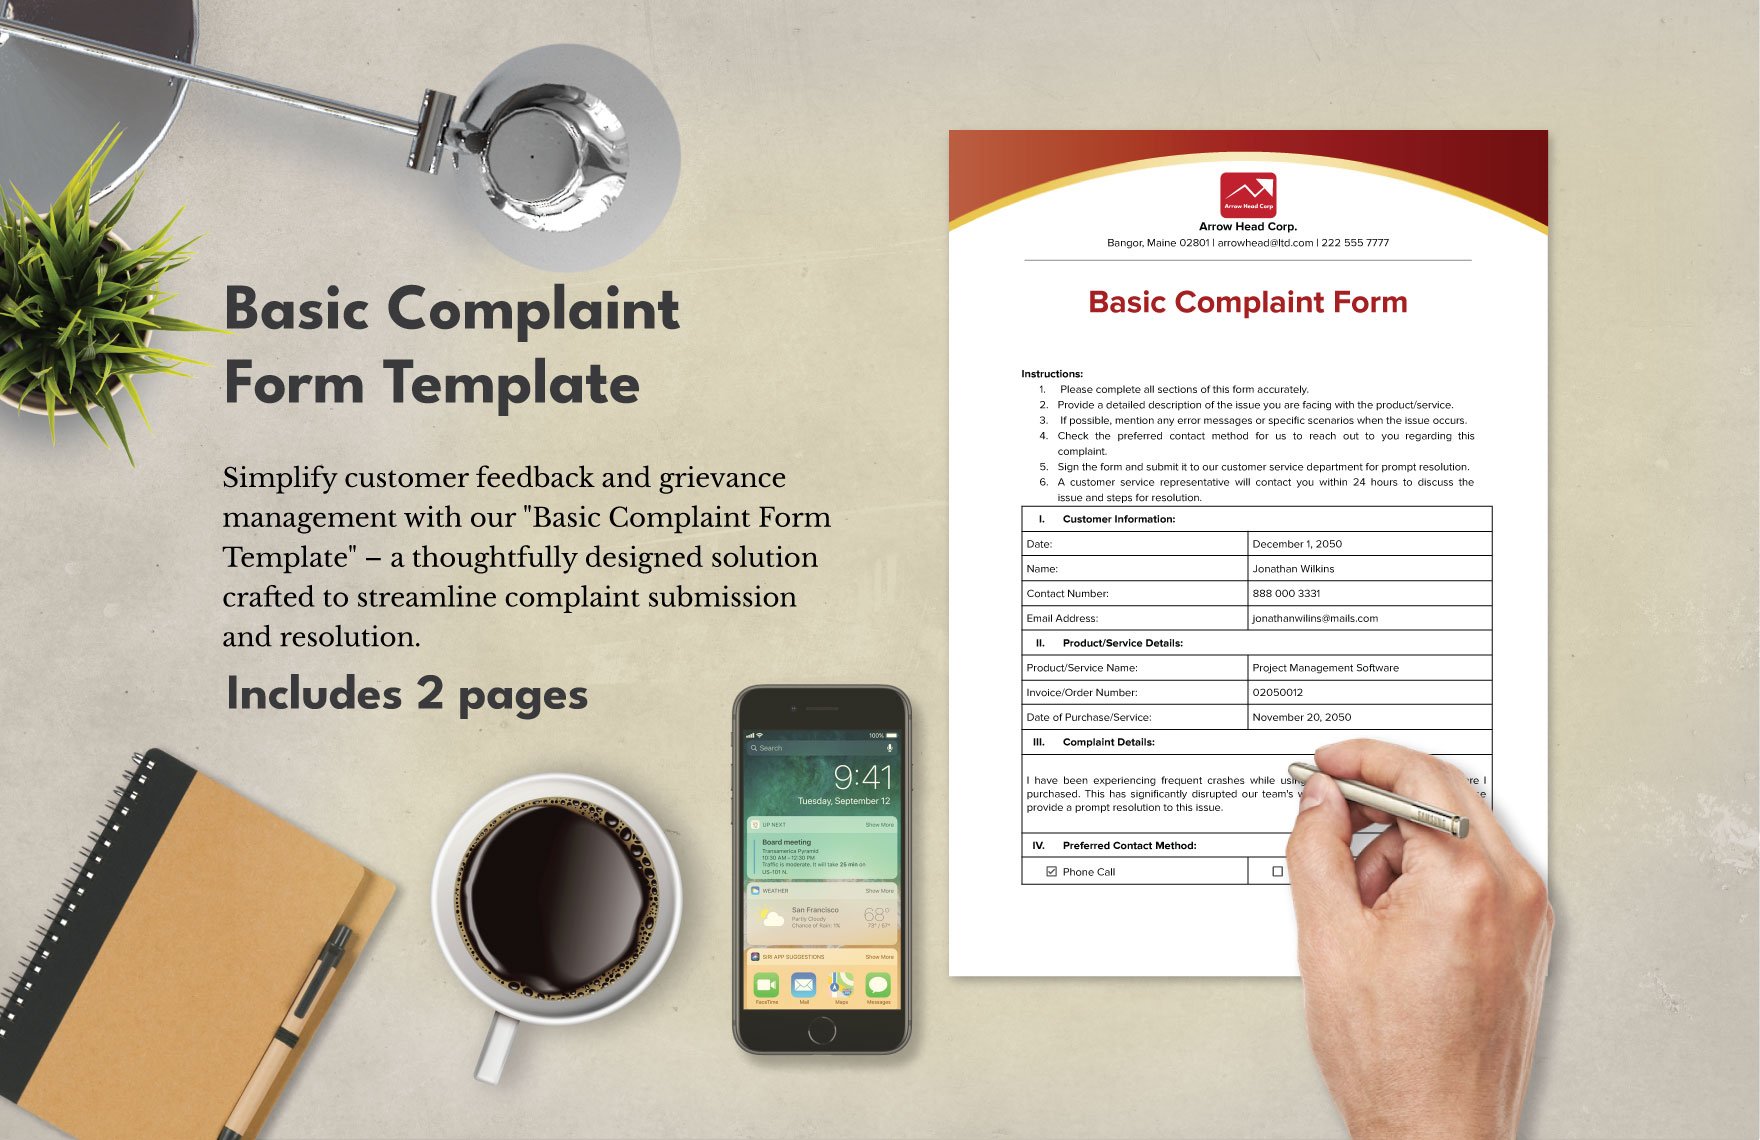 Basic Complaint Form Template